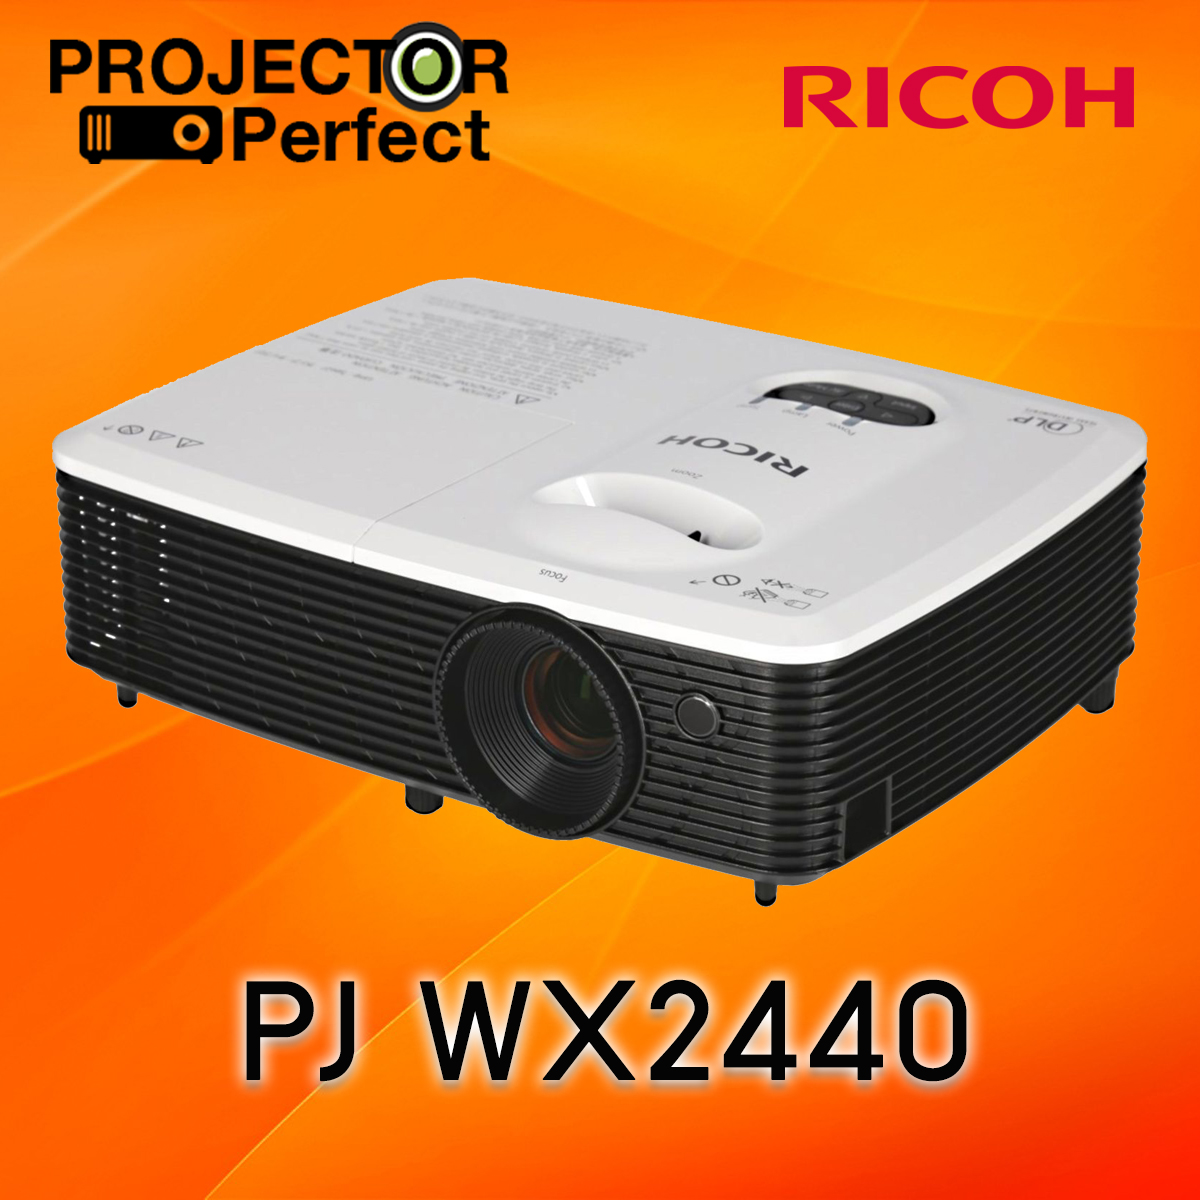 RICOH PJ WX2440 DLP Projector (3,100 Ansi Lumens/WXGA)  เครื่องฉายภาพโปรเจคเตอร์ริโก้ รุ่น WX2440